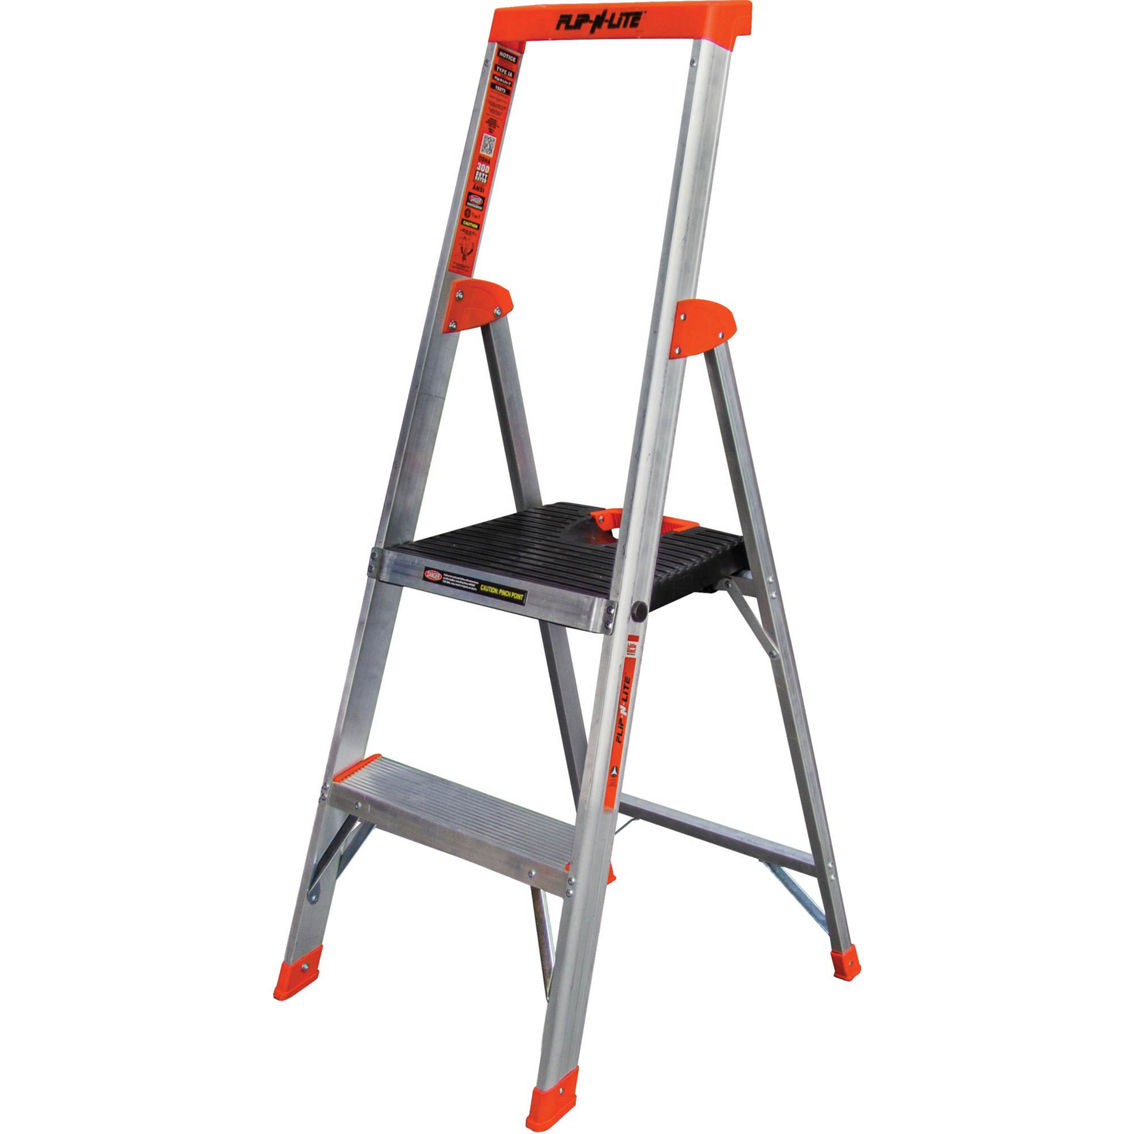 Little Giant Flip-n-lite 4 Ft. Ladder, Ladders, Patio, Garden & Garage